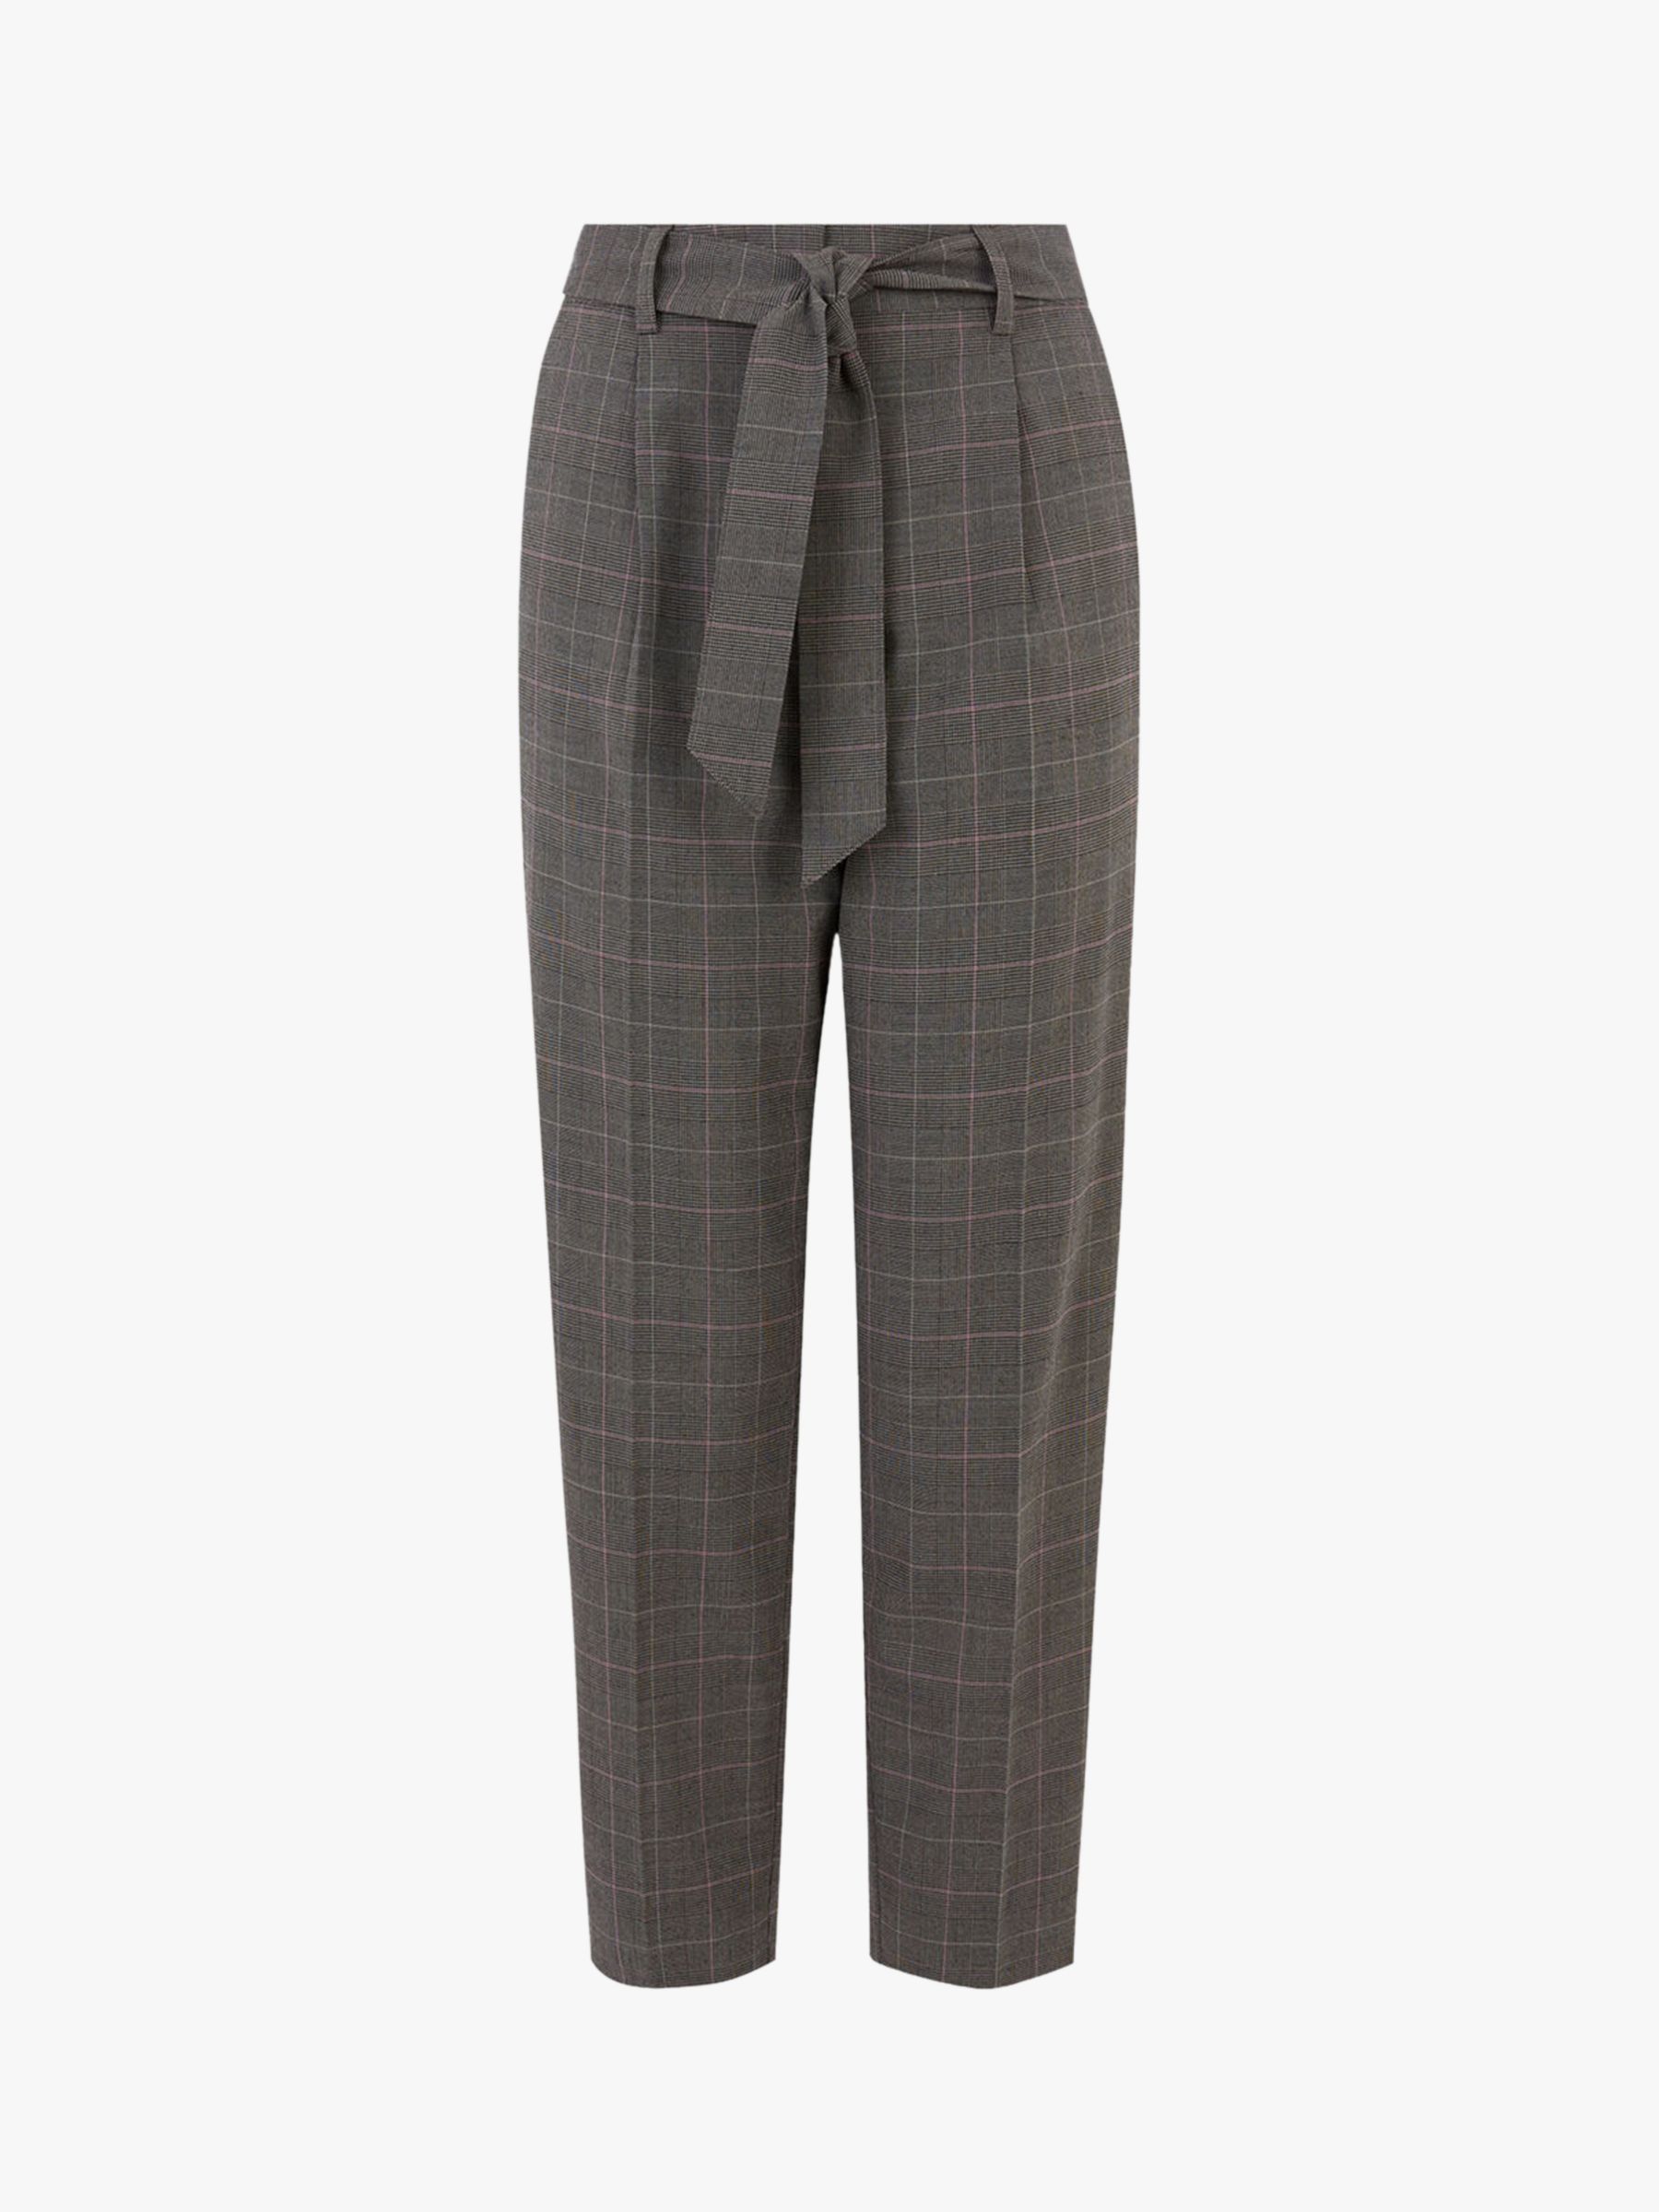 grey peg trousers